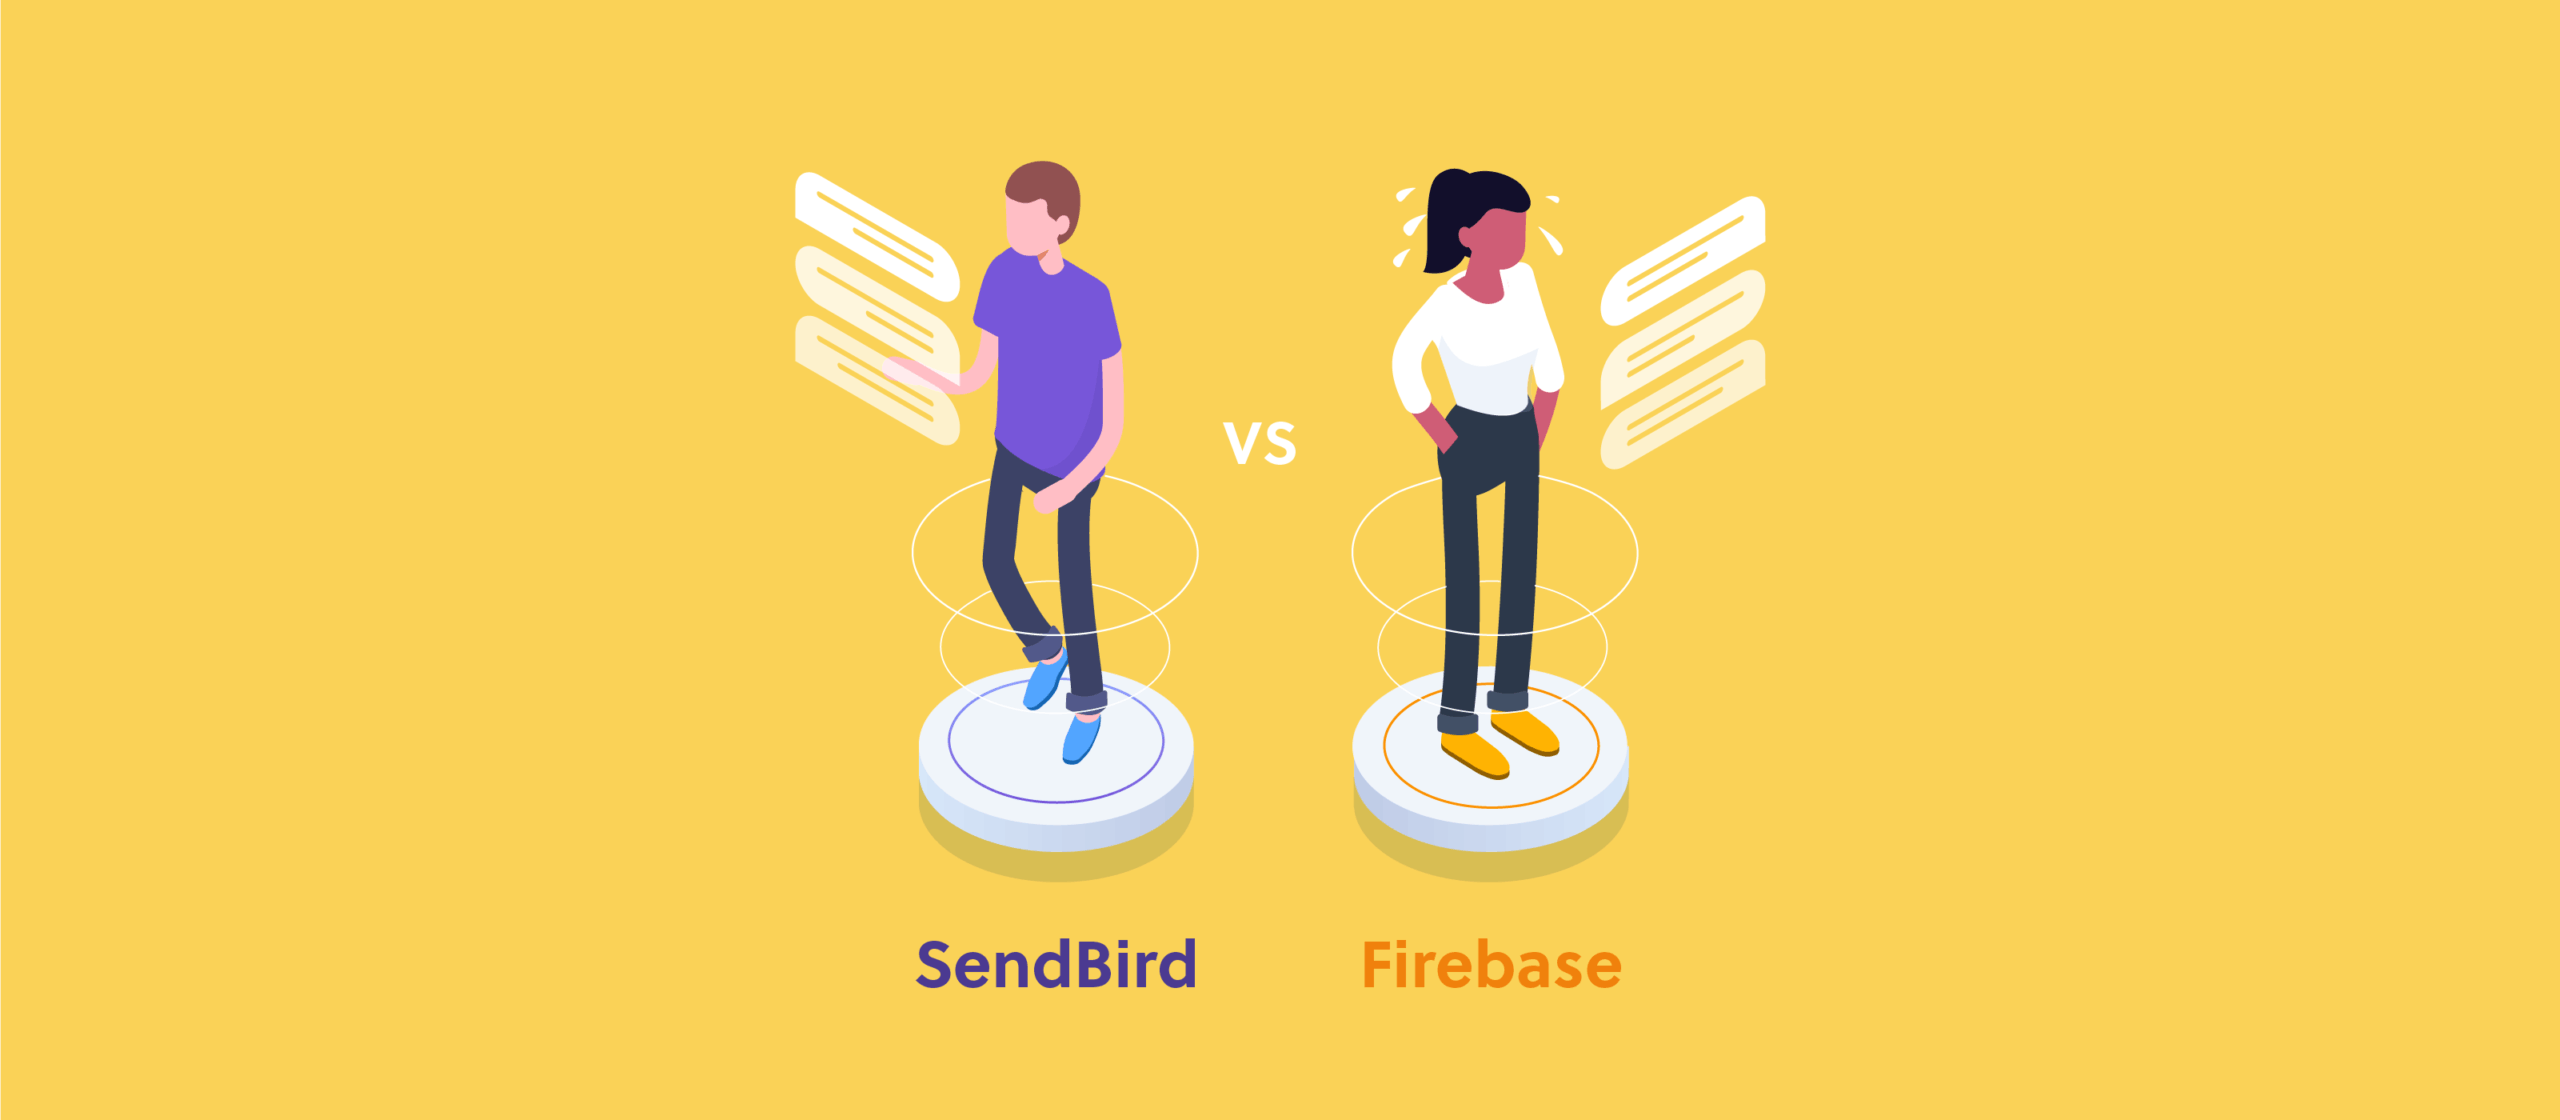 20180616 Send Birdvs Firebase 1